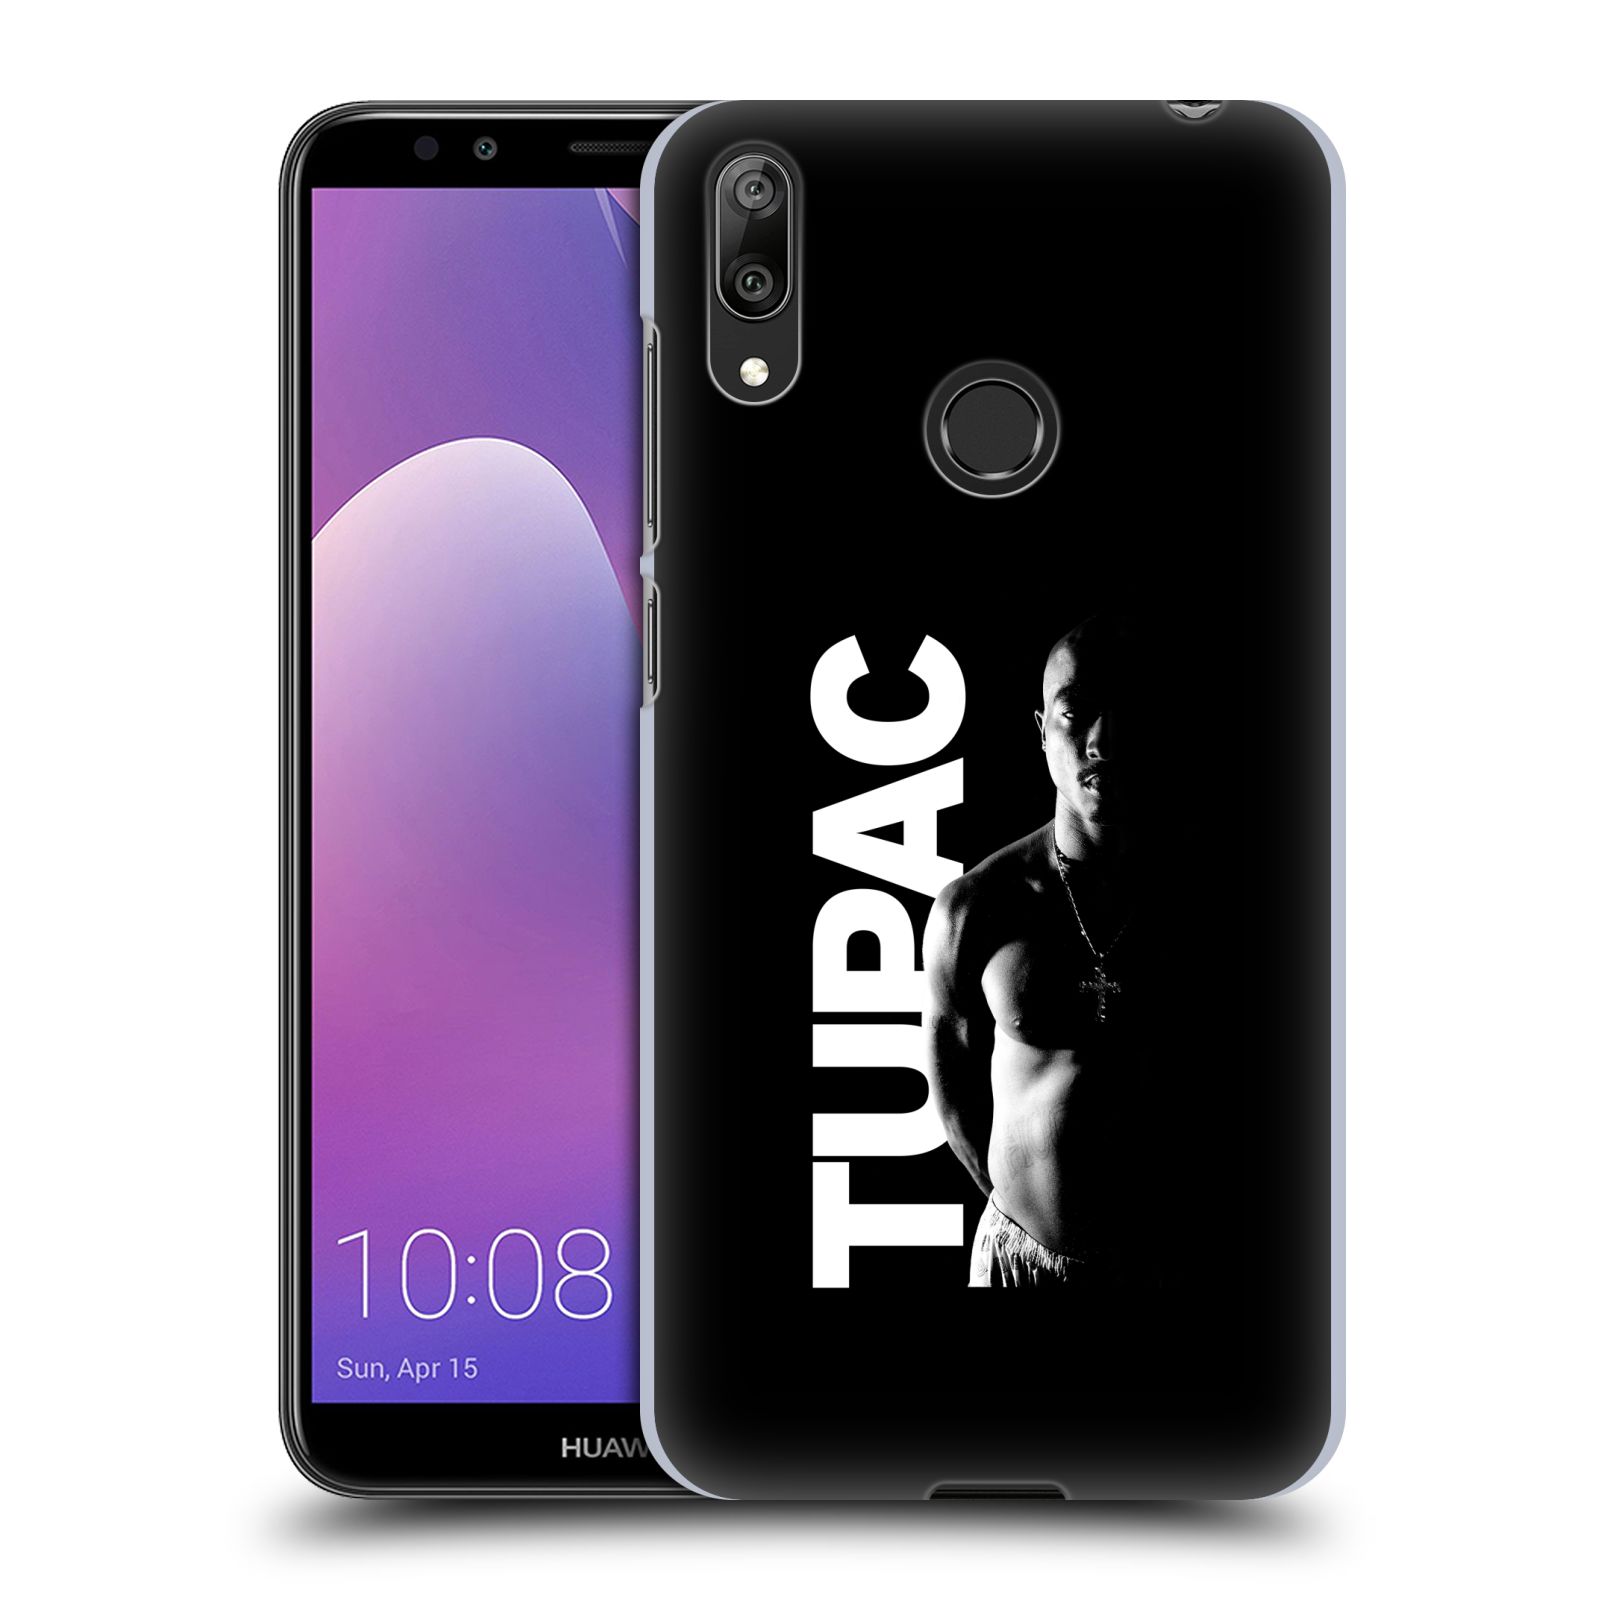 Pouzdro na mobil Huawei Y7 2019 - Head Case - Zpěvák rapper Tupac Shakur 2Pac bílý nadpis